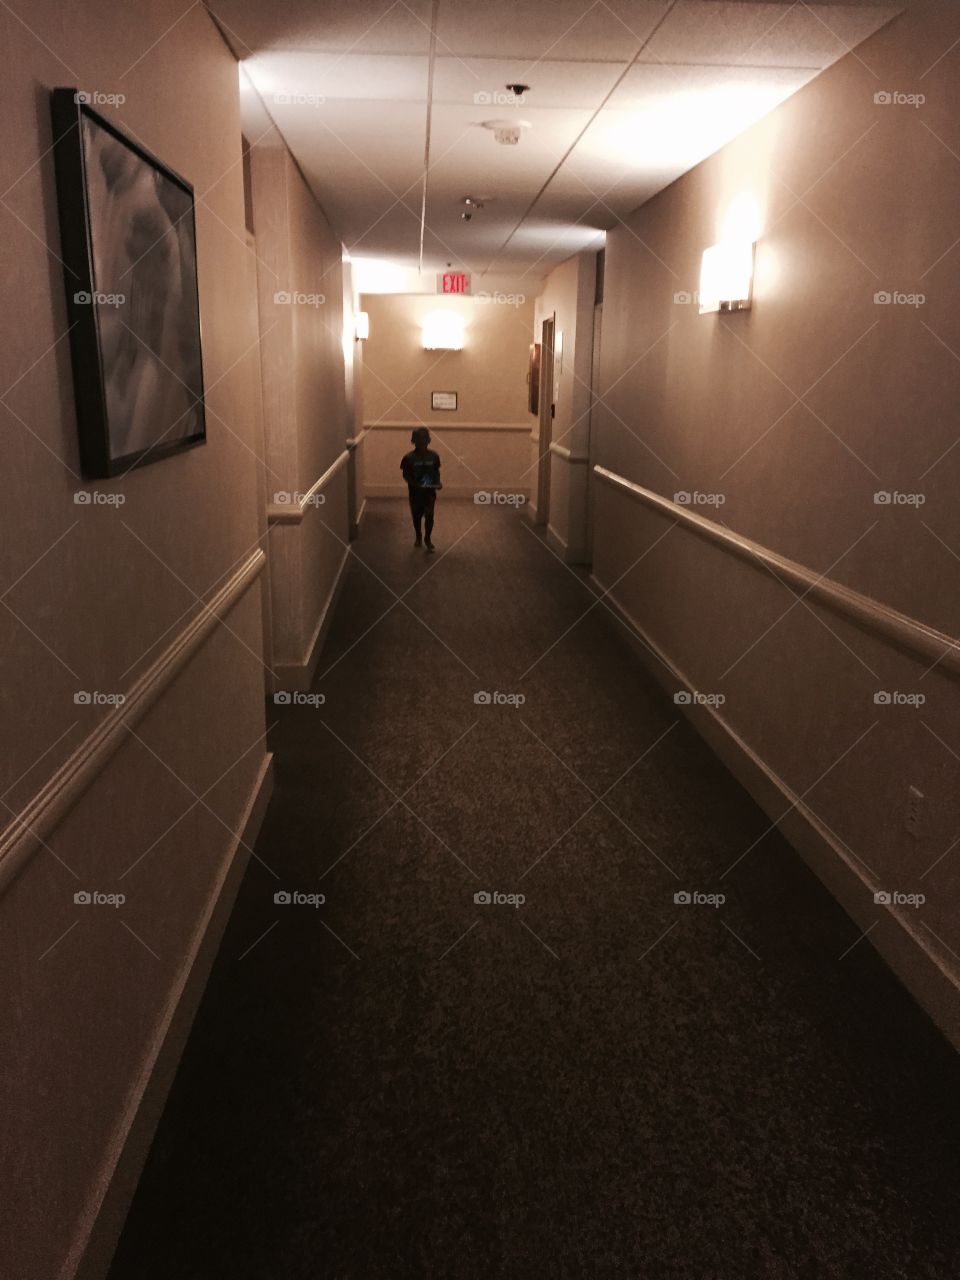 Hotel hallways 